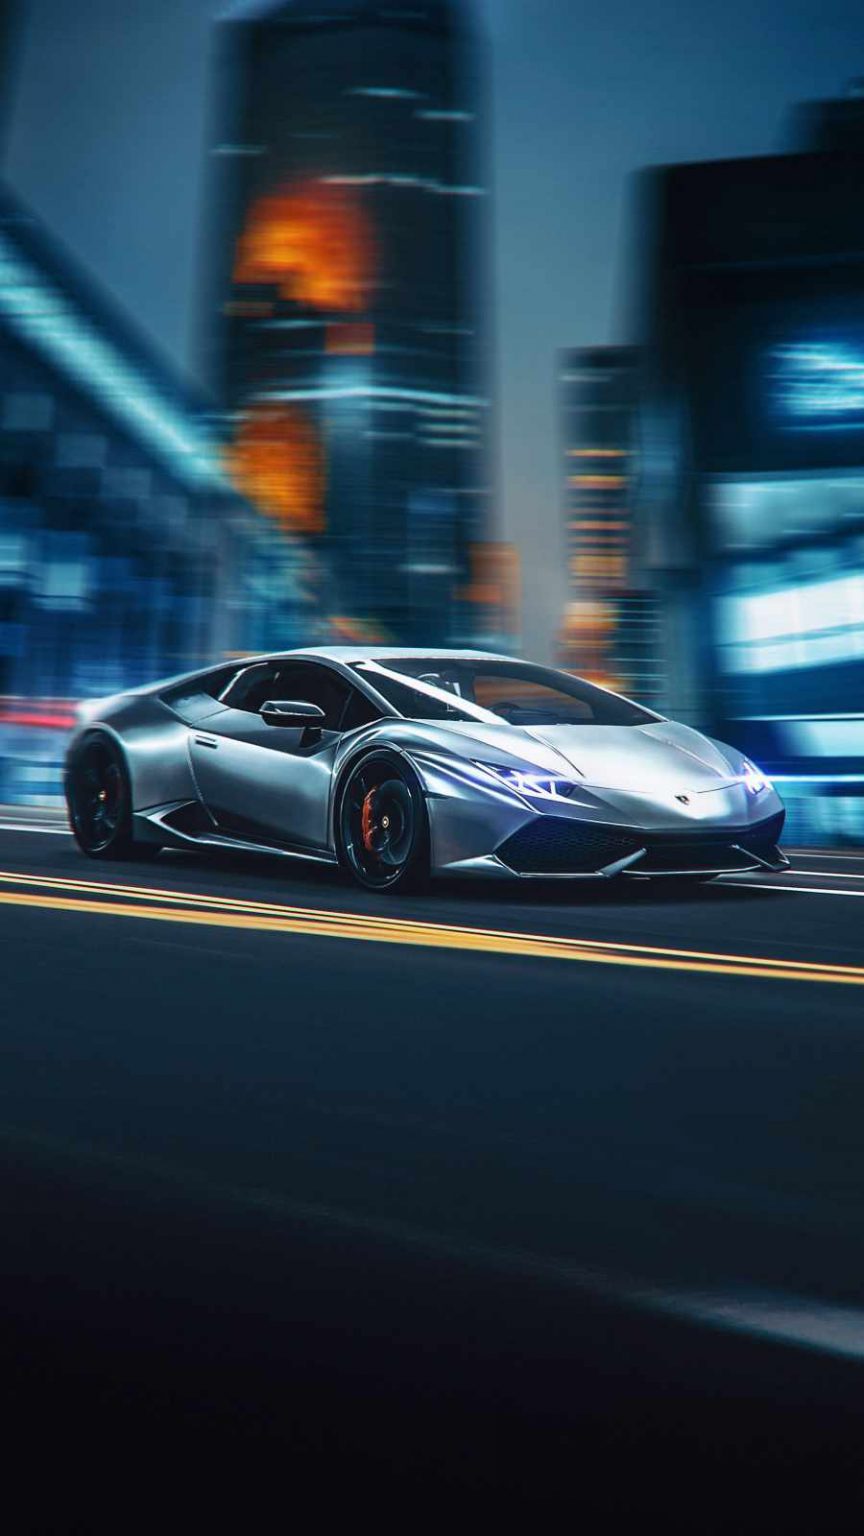 Lamborghini Night - IPhone Wallpapers : iPhone Wallpapers